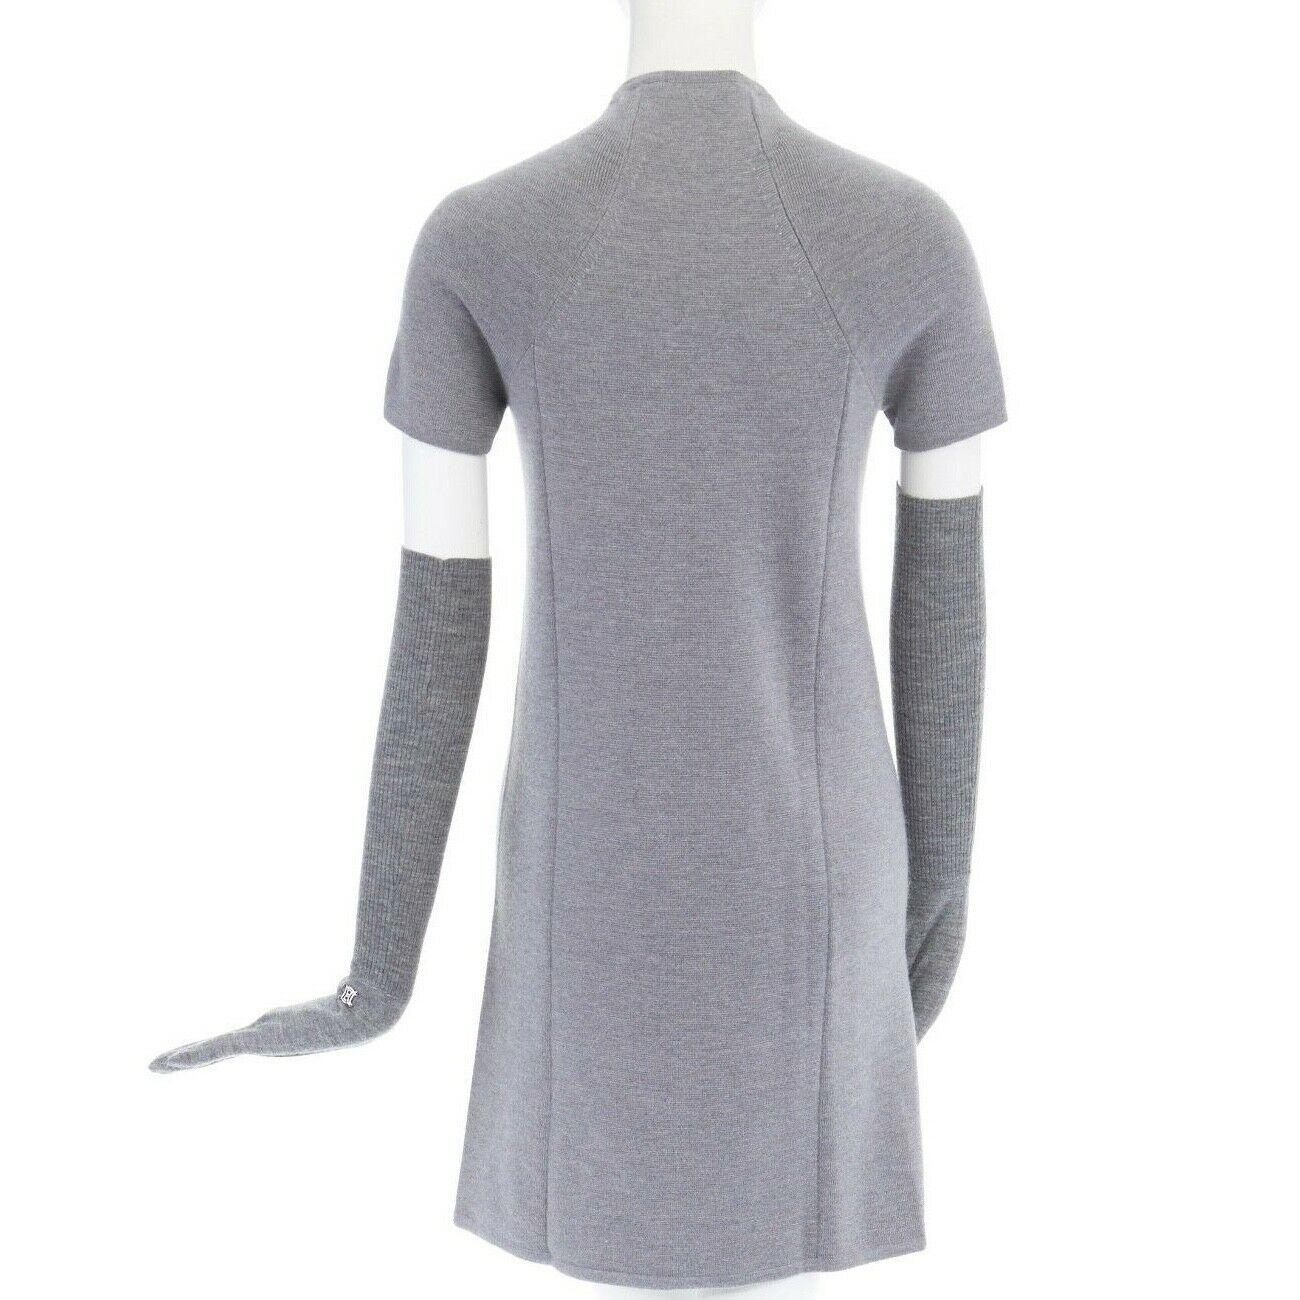 Gray CELINE MICHAEL KORS Vintage silk cashmere leather tassel sweater dress glove S